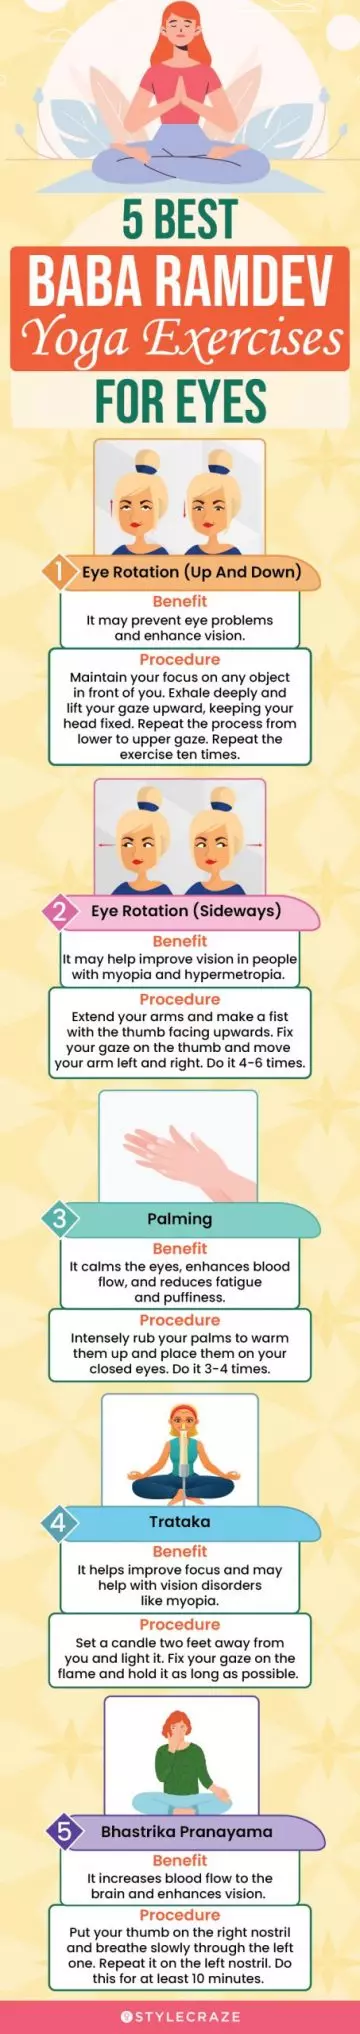 5 best baba ramdev yoga exercises for eyes (infographic)